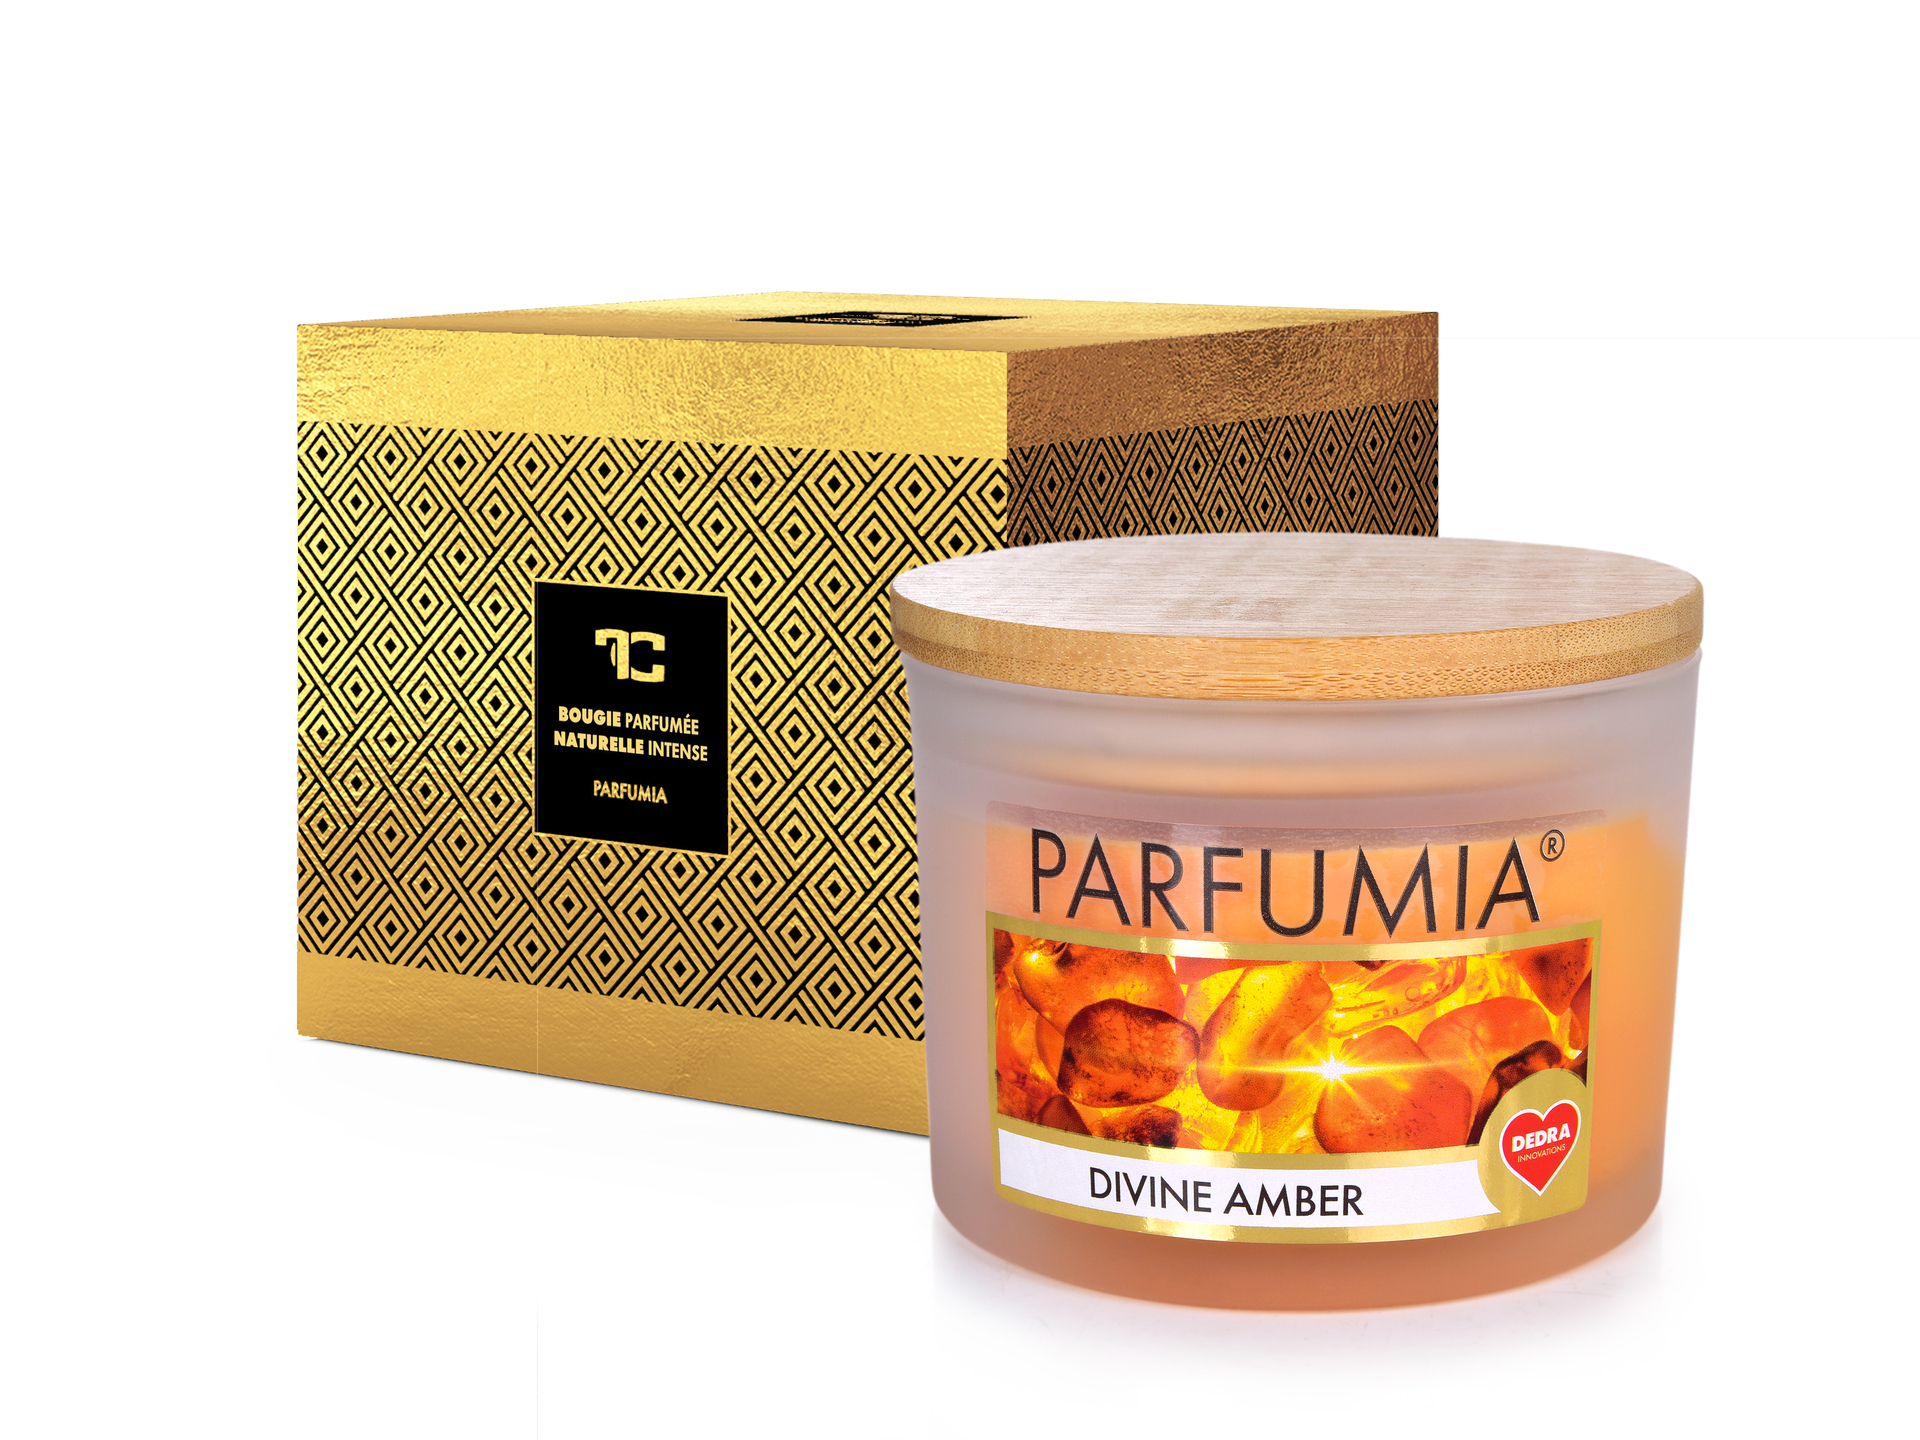 400 ml sójová vonná eko-svíce, 2 knoty, Divine amber, Parfumia